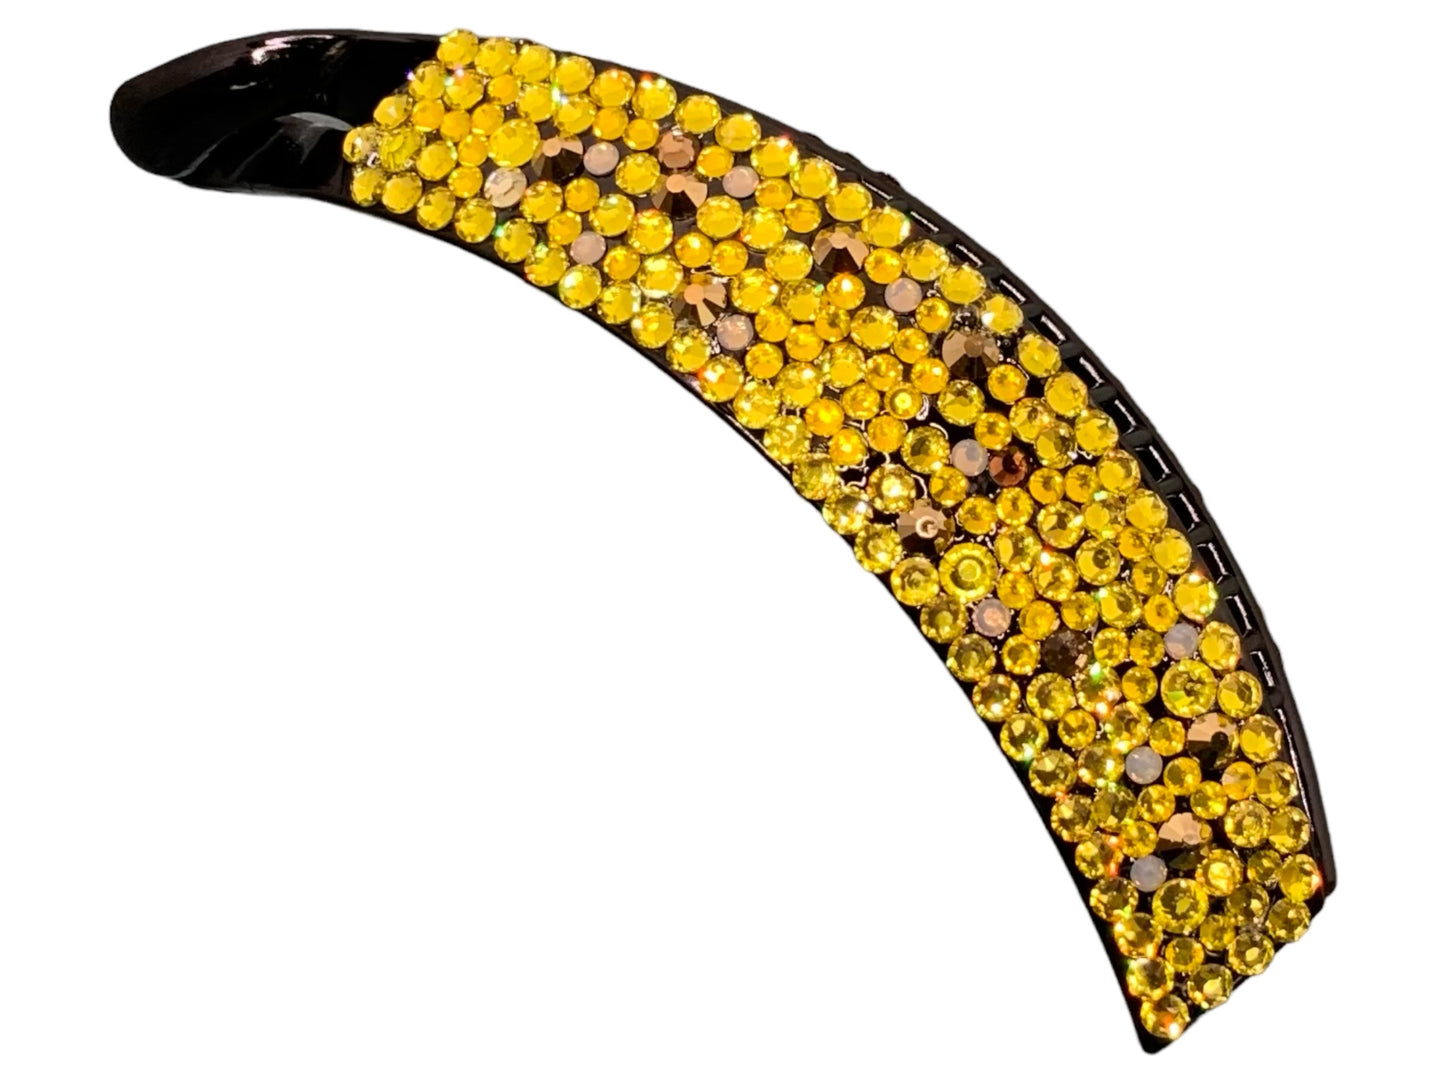 Yellow and Gold Rhinestone Banana Clip